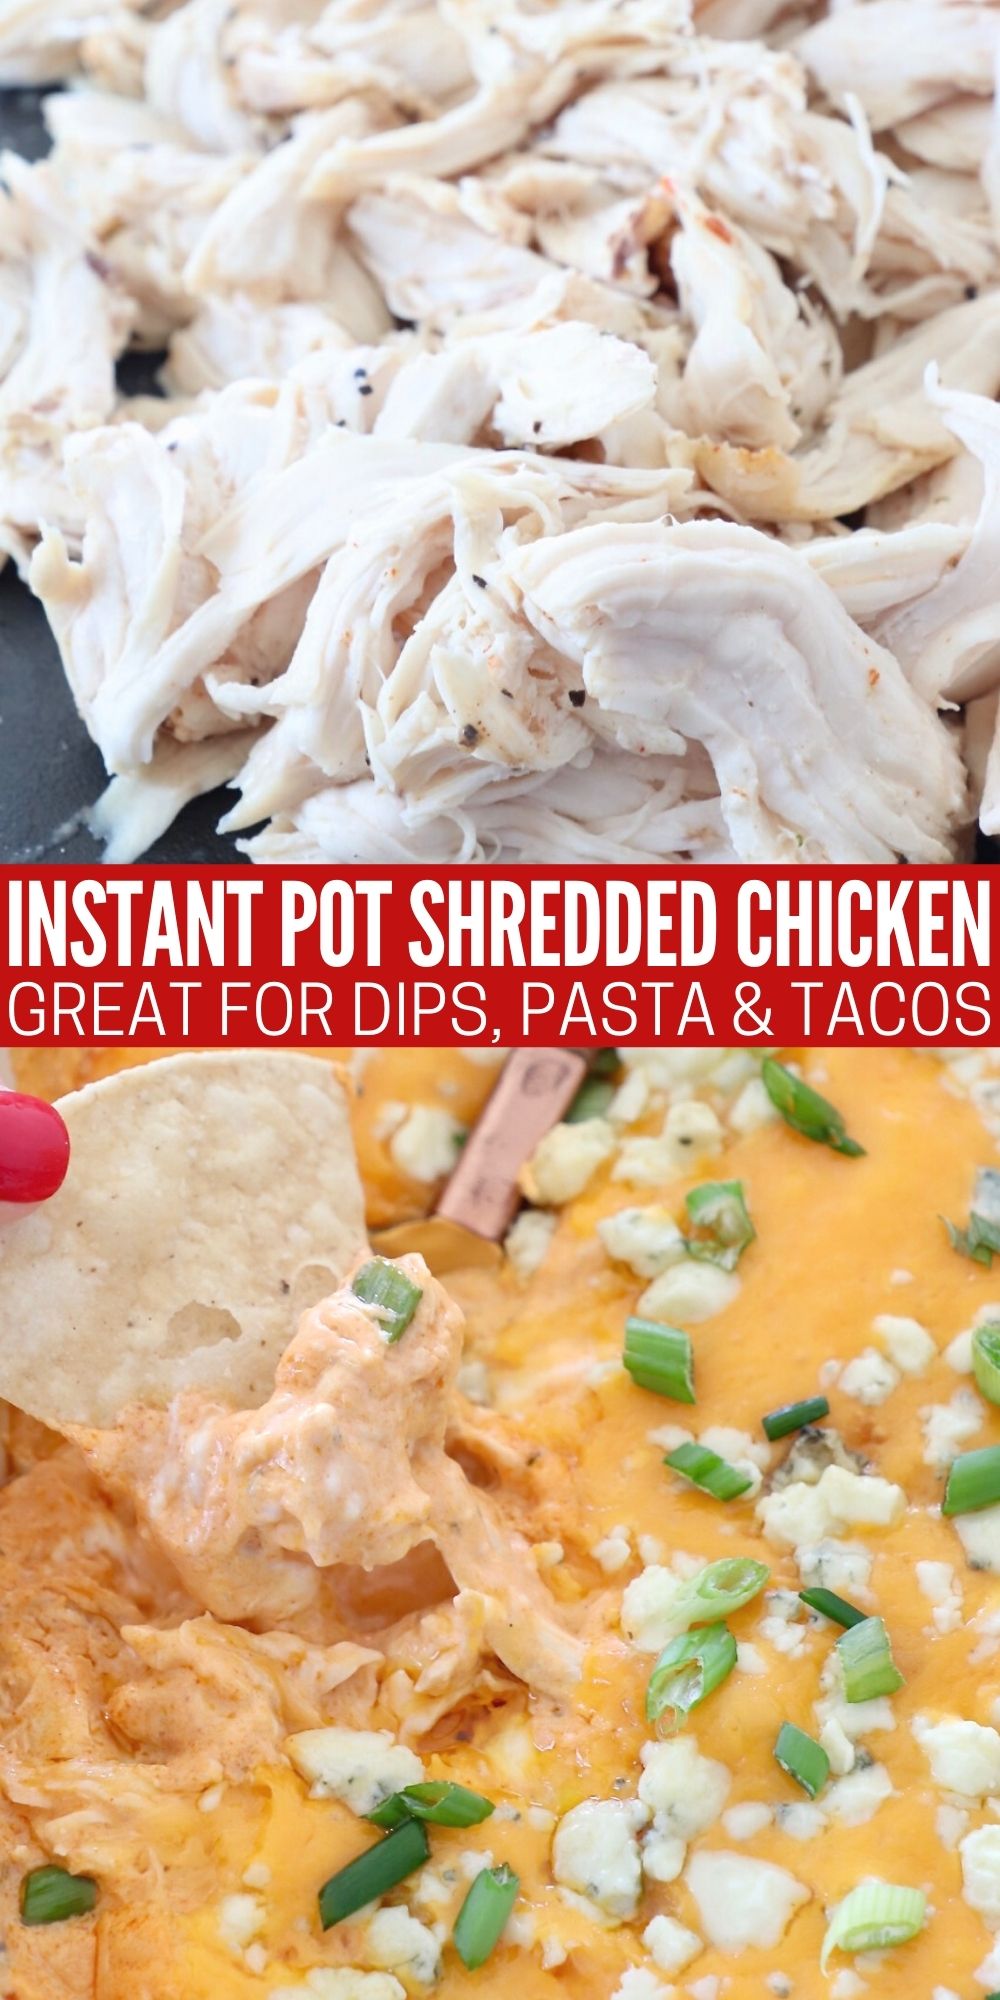 Instant Pot Shredded Chicken Recipe - WhitneyBond.com